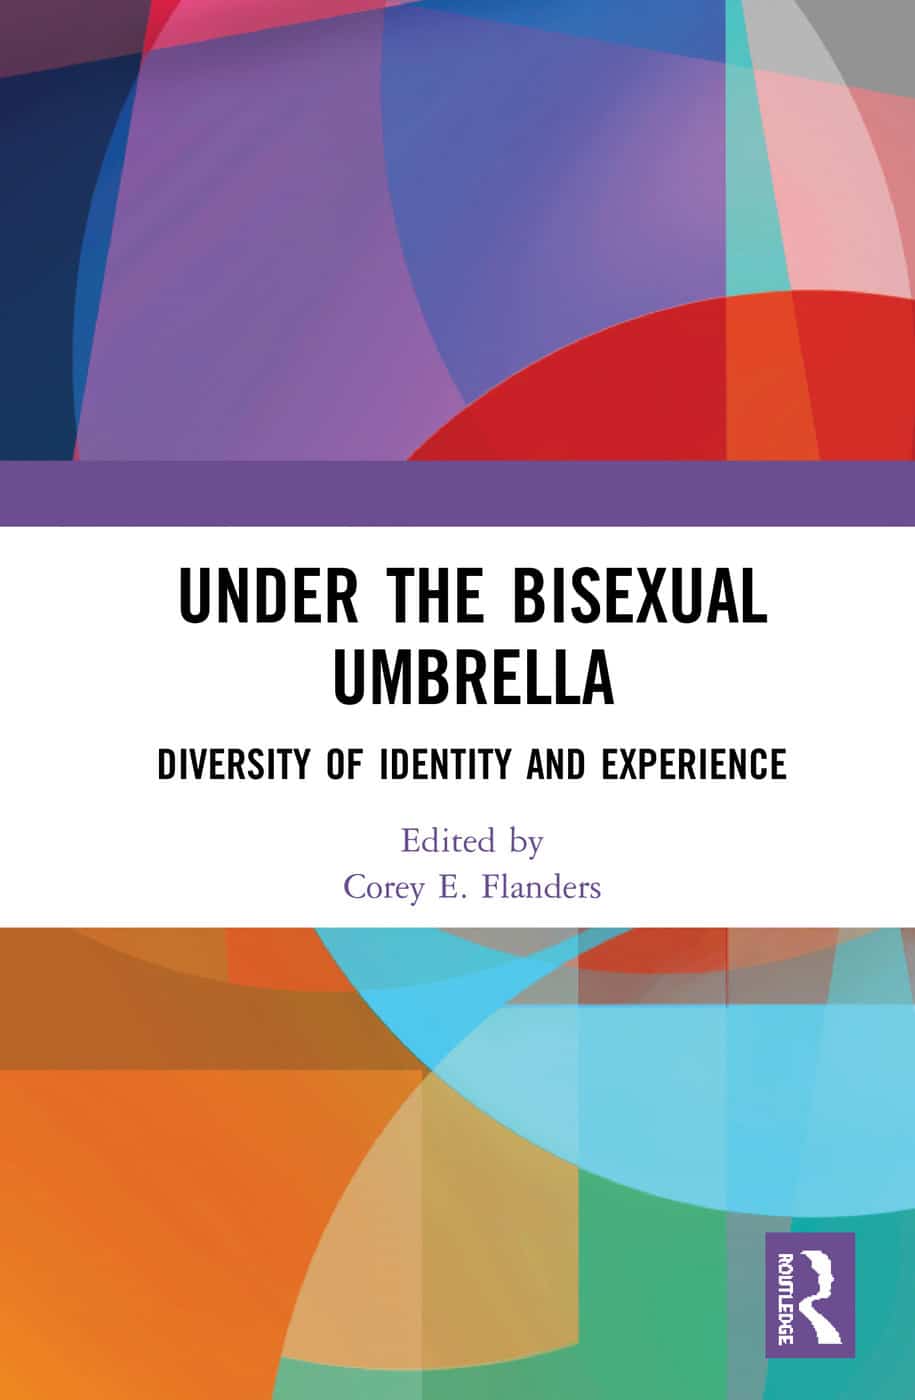 Corey E. Flanders: Under the Bisexual Umbrella (2020, Taylor & Francis Group)